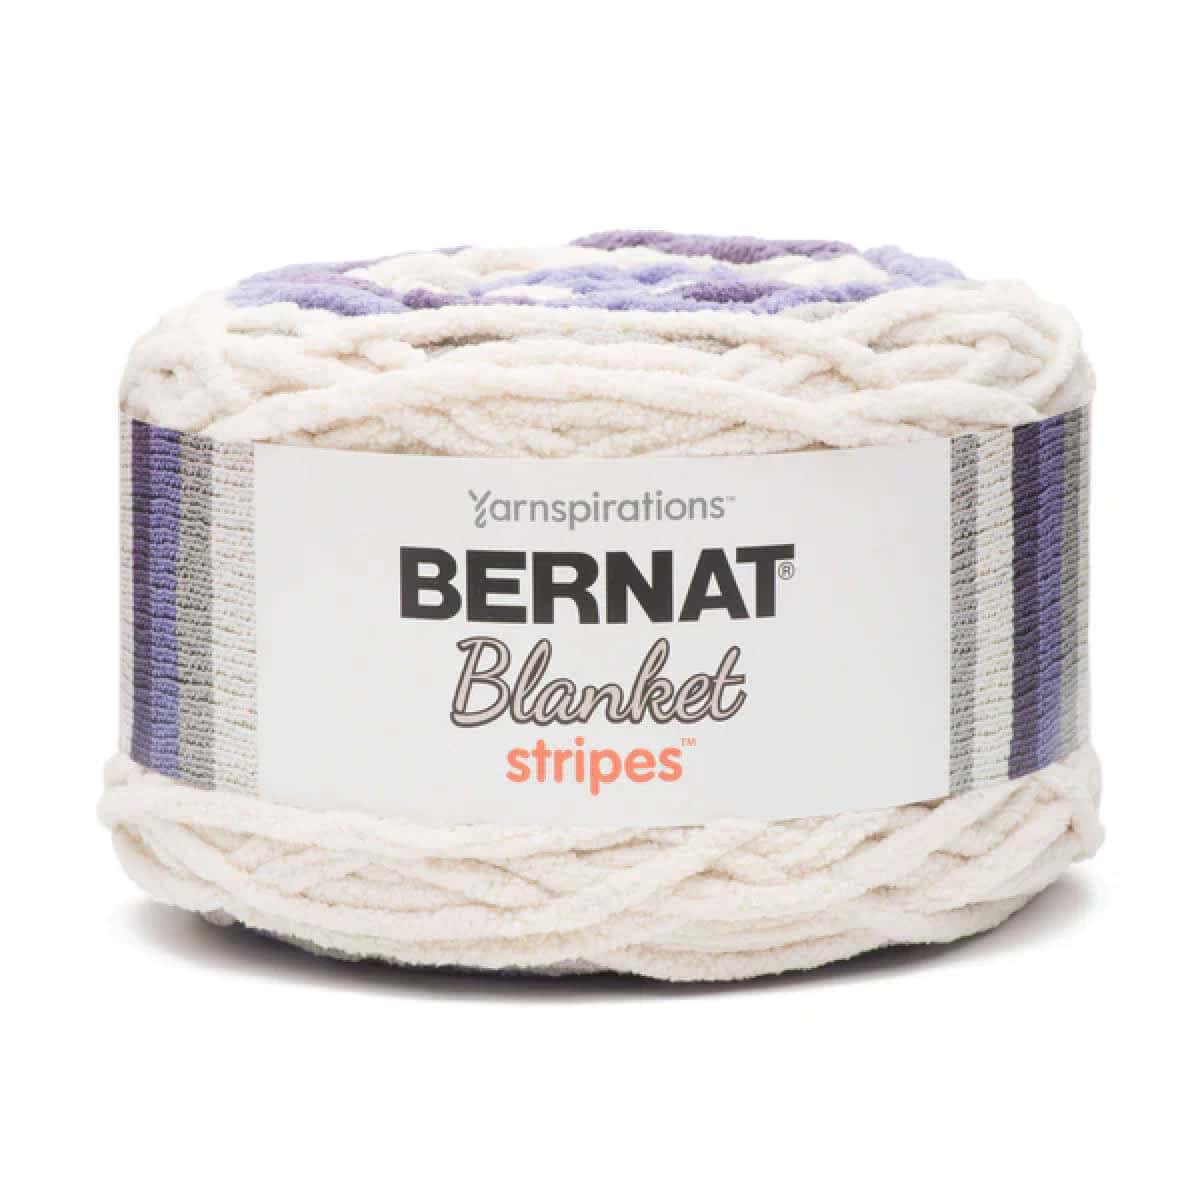 Bernat Blanket Stripes Yarn Product